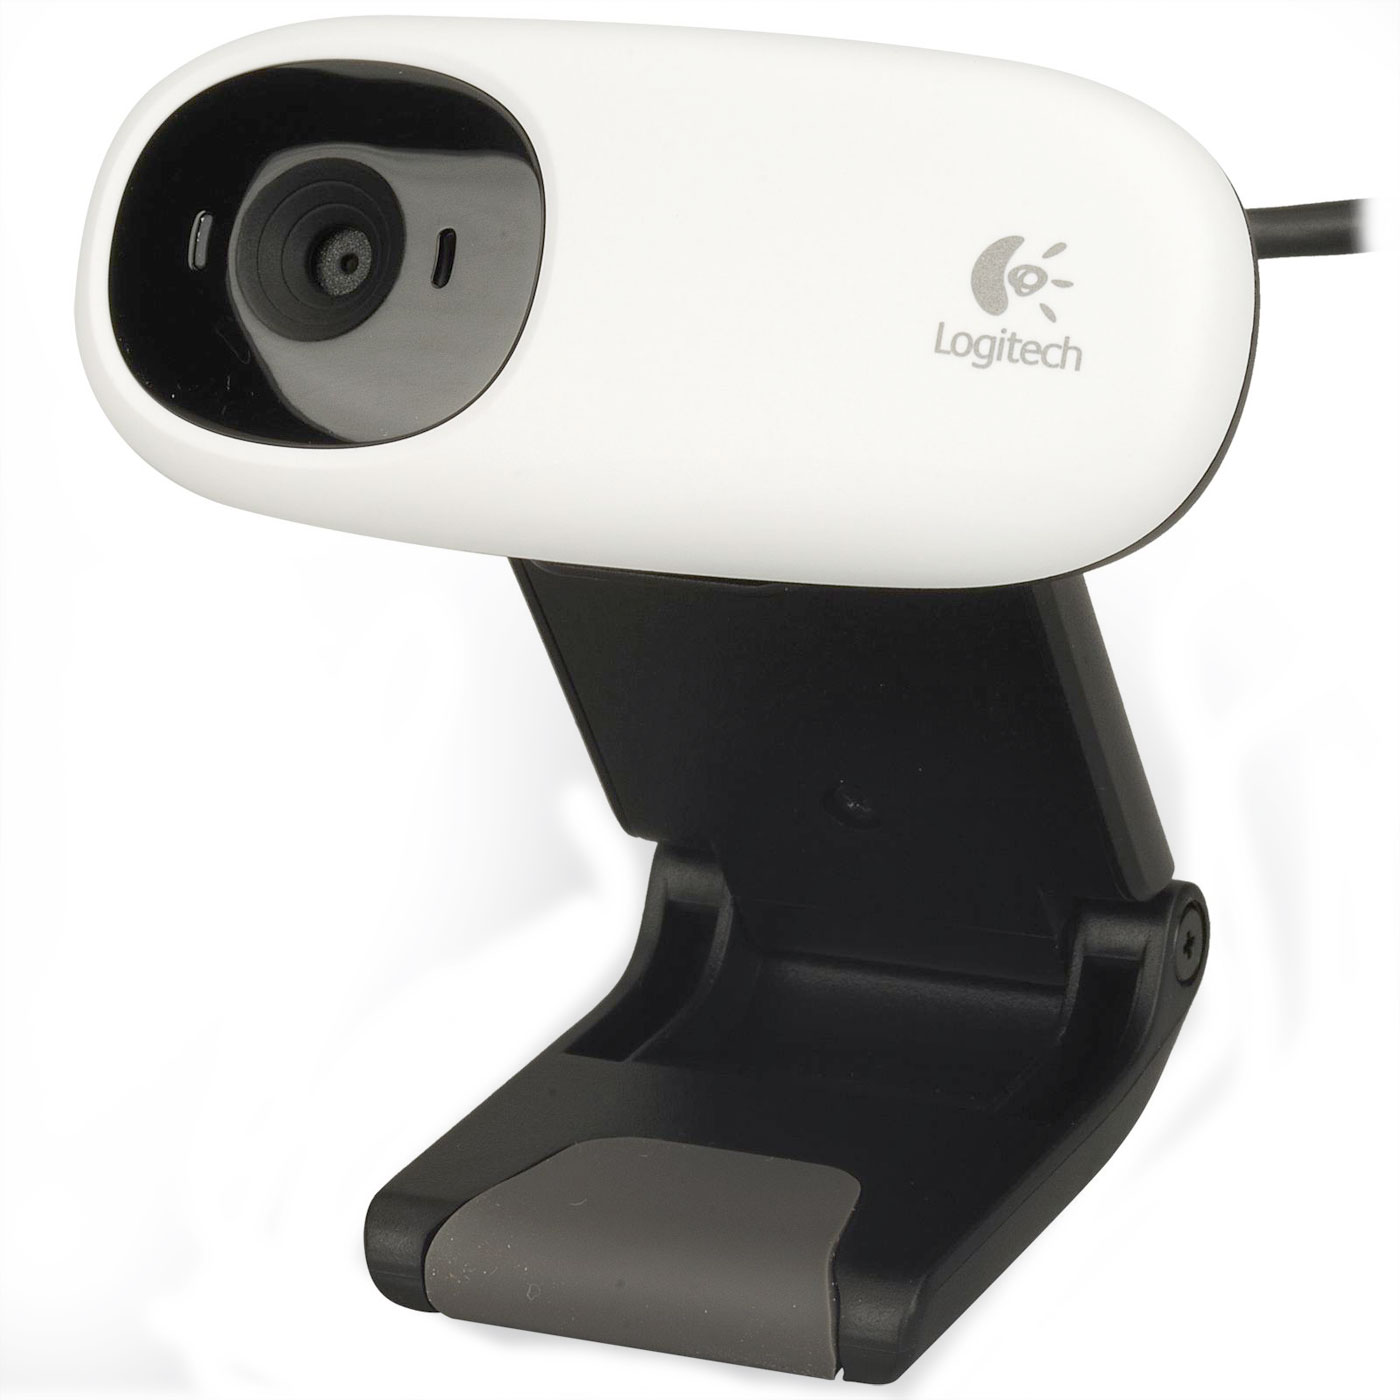 logitech webcam c110 driver for windows 10